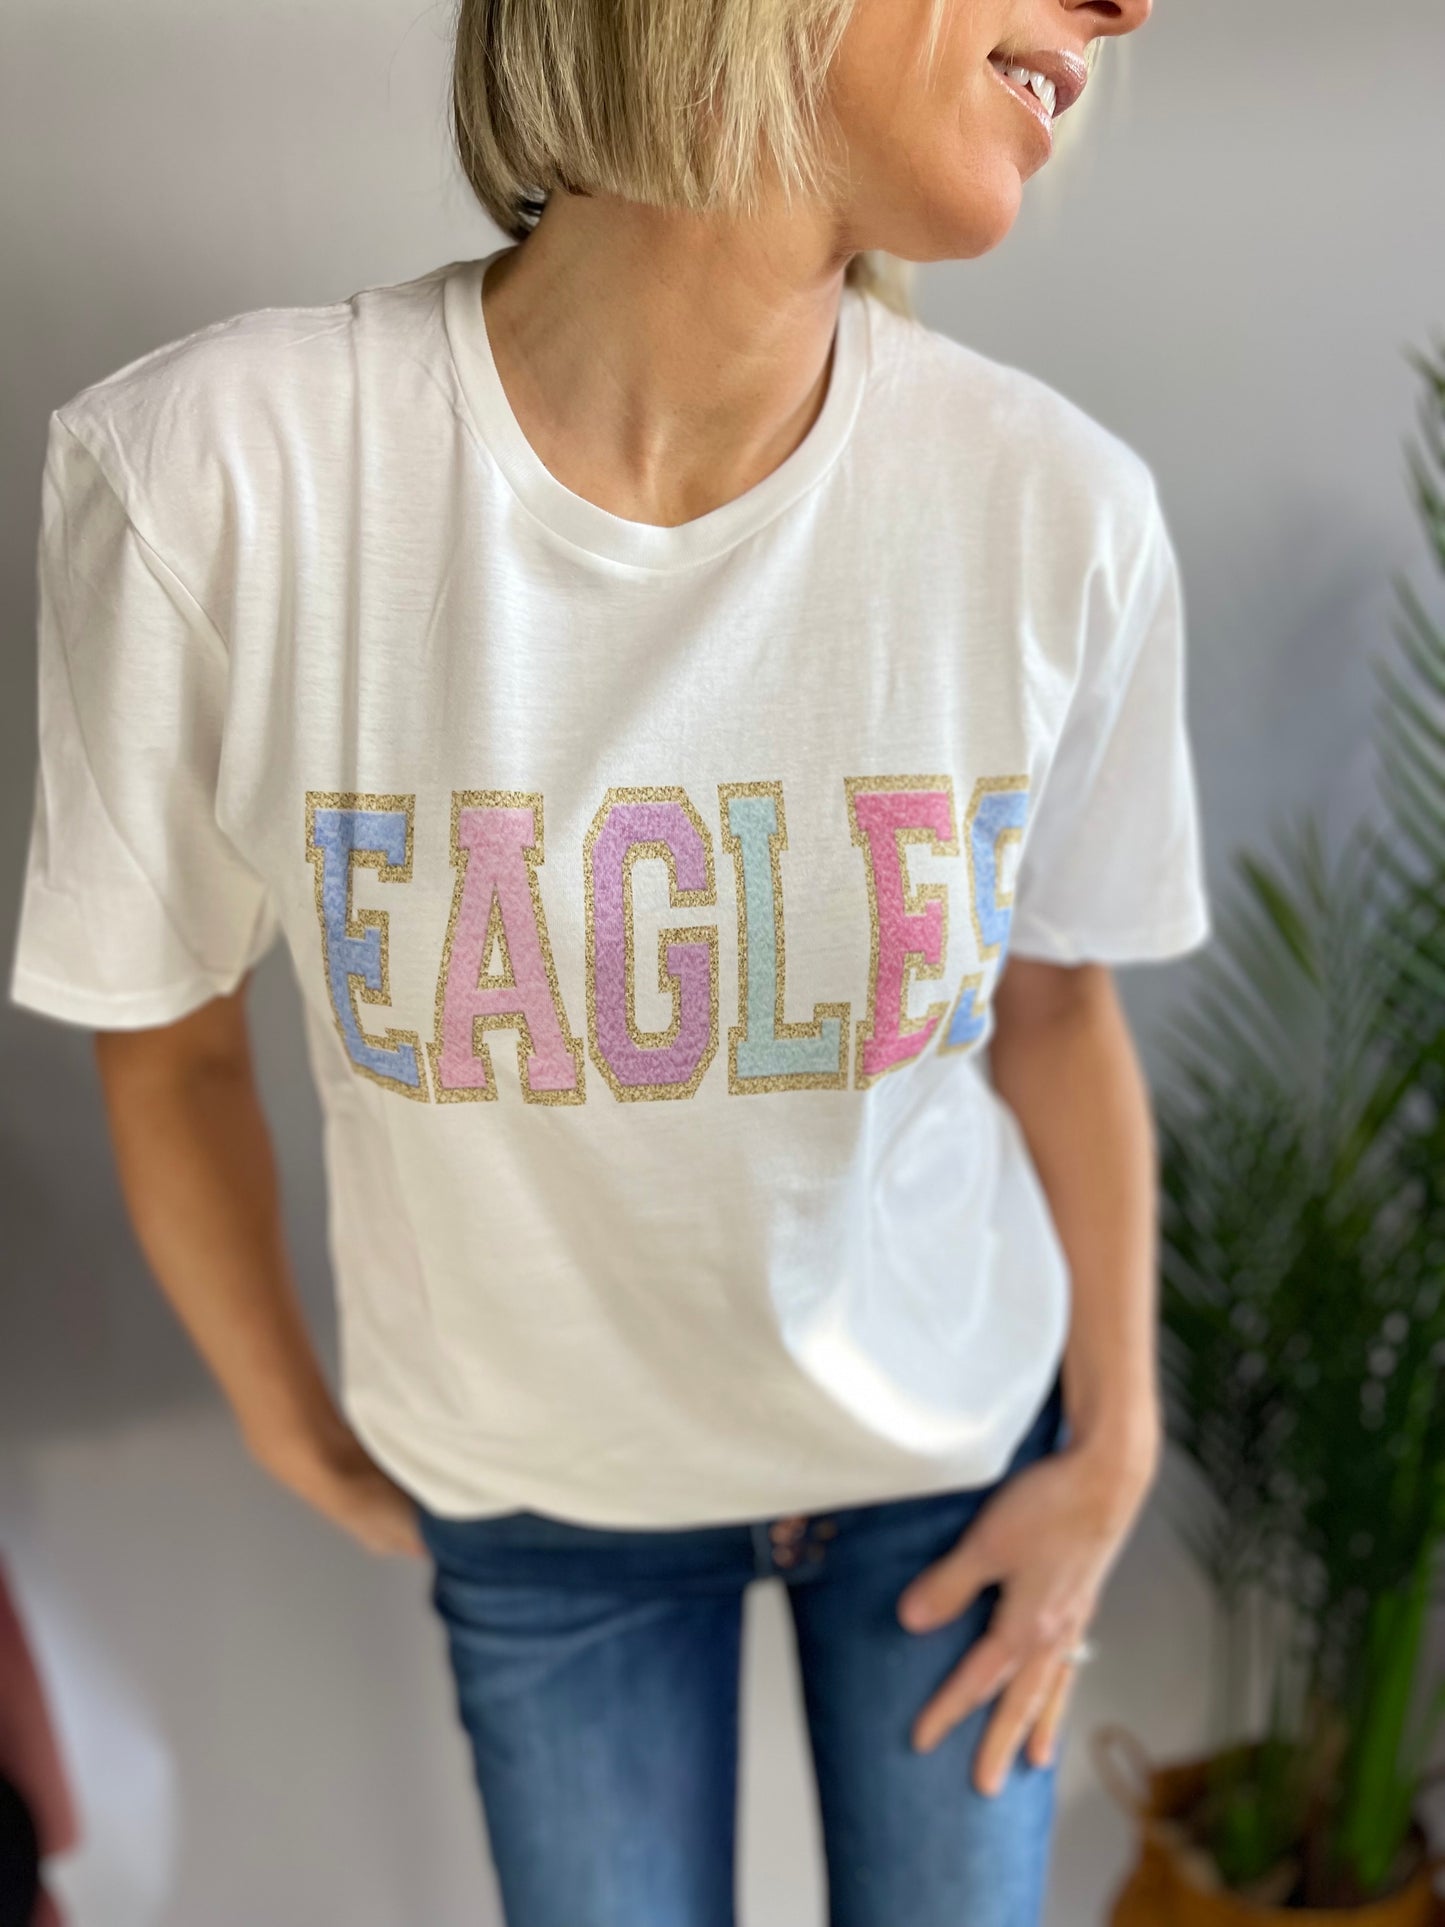 Eagles Varsity Block T’shirt new colors added!